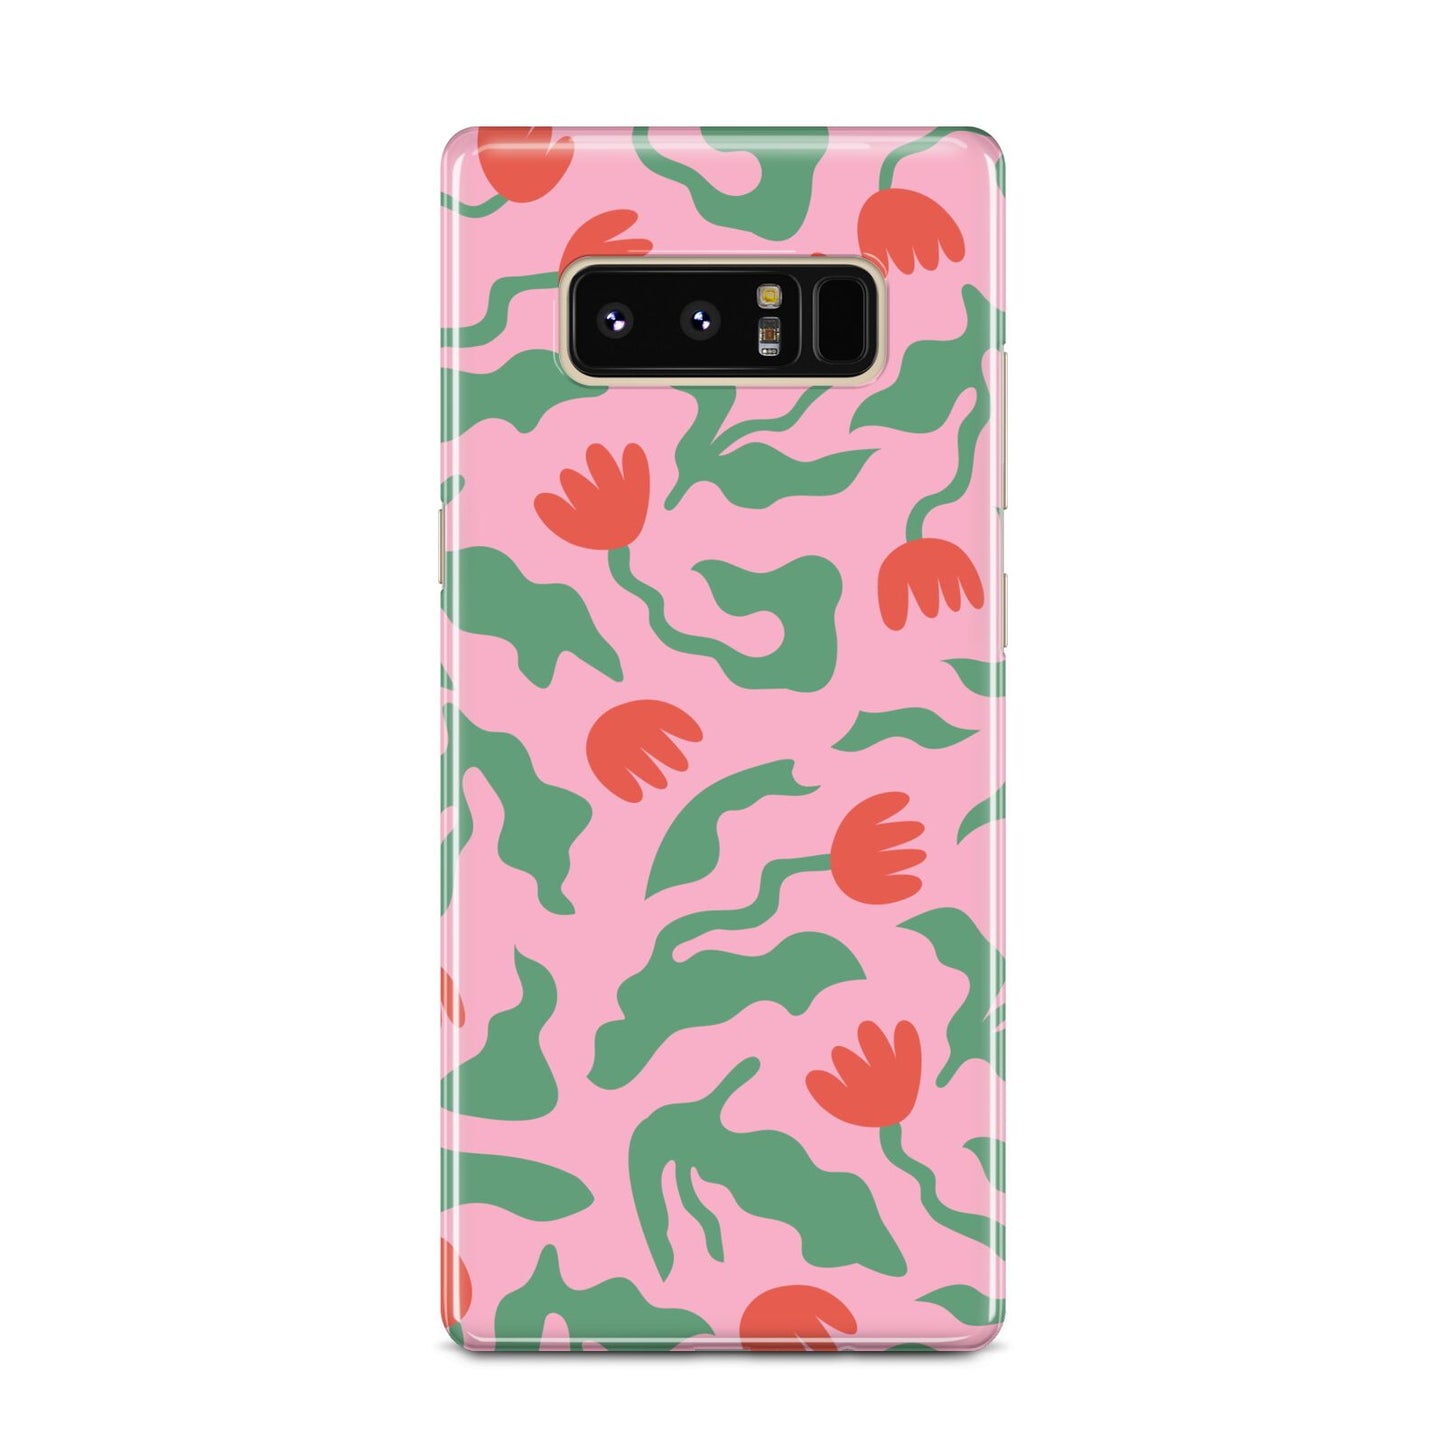 Simple Floral Samsung Galaxy Note 8 Case